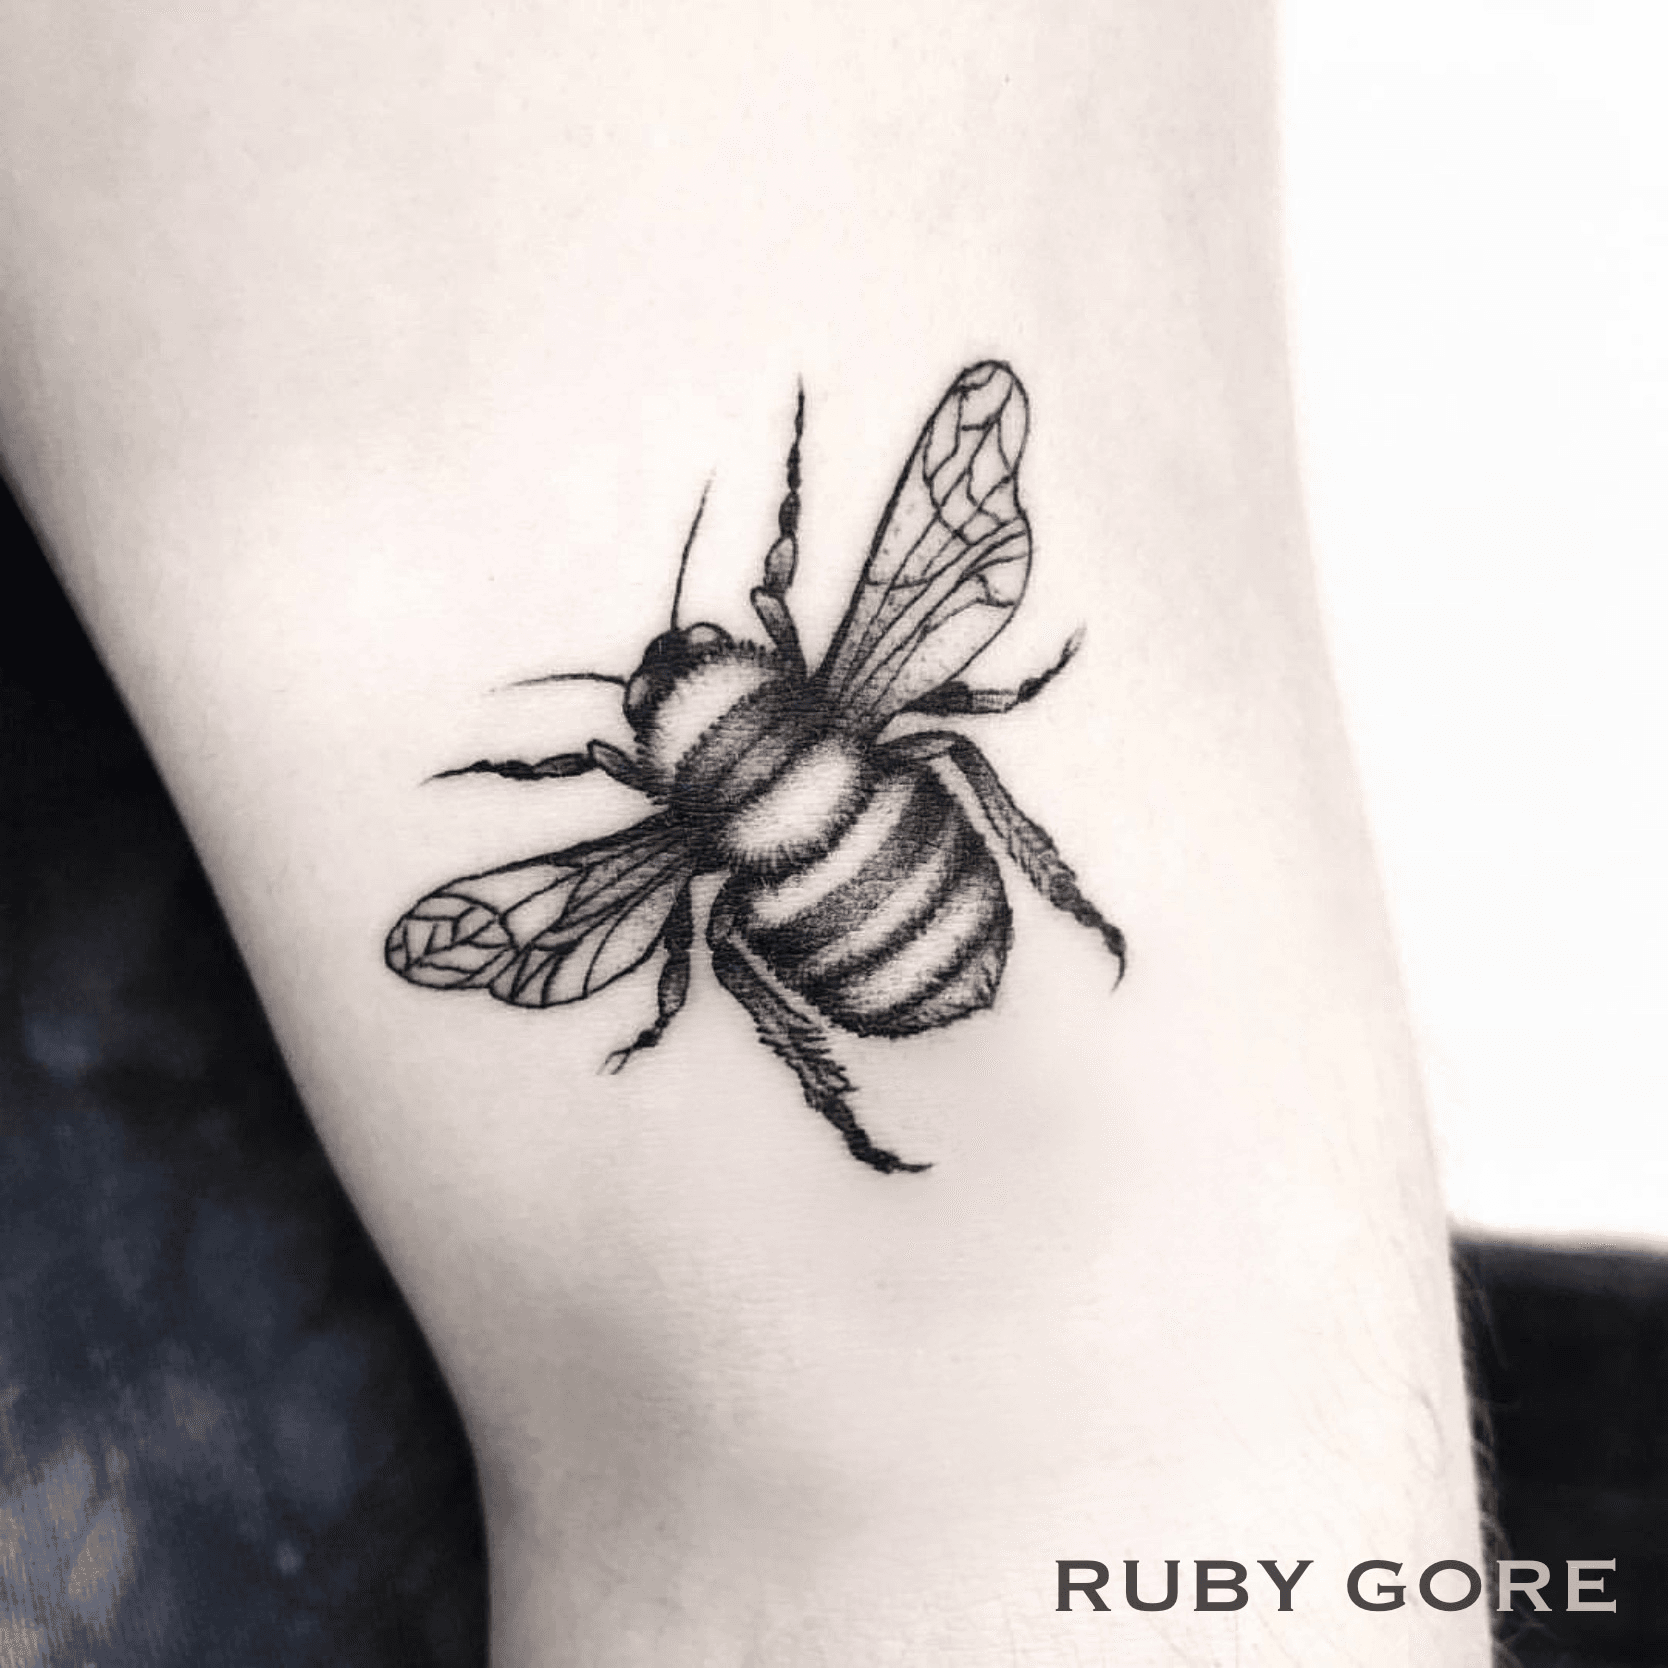 Tattoo uploaded by Ruby Gore • Cute little bee tattoo  /therubygore/   #vegantattoo #onlyblackart #btattooing #blacktattooart #blackworkers  #blackwork #illustrativetattoo #birdtattoo #flowertattoo ...